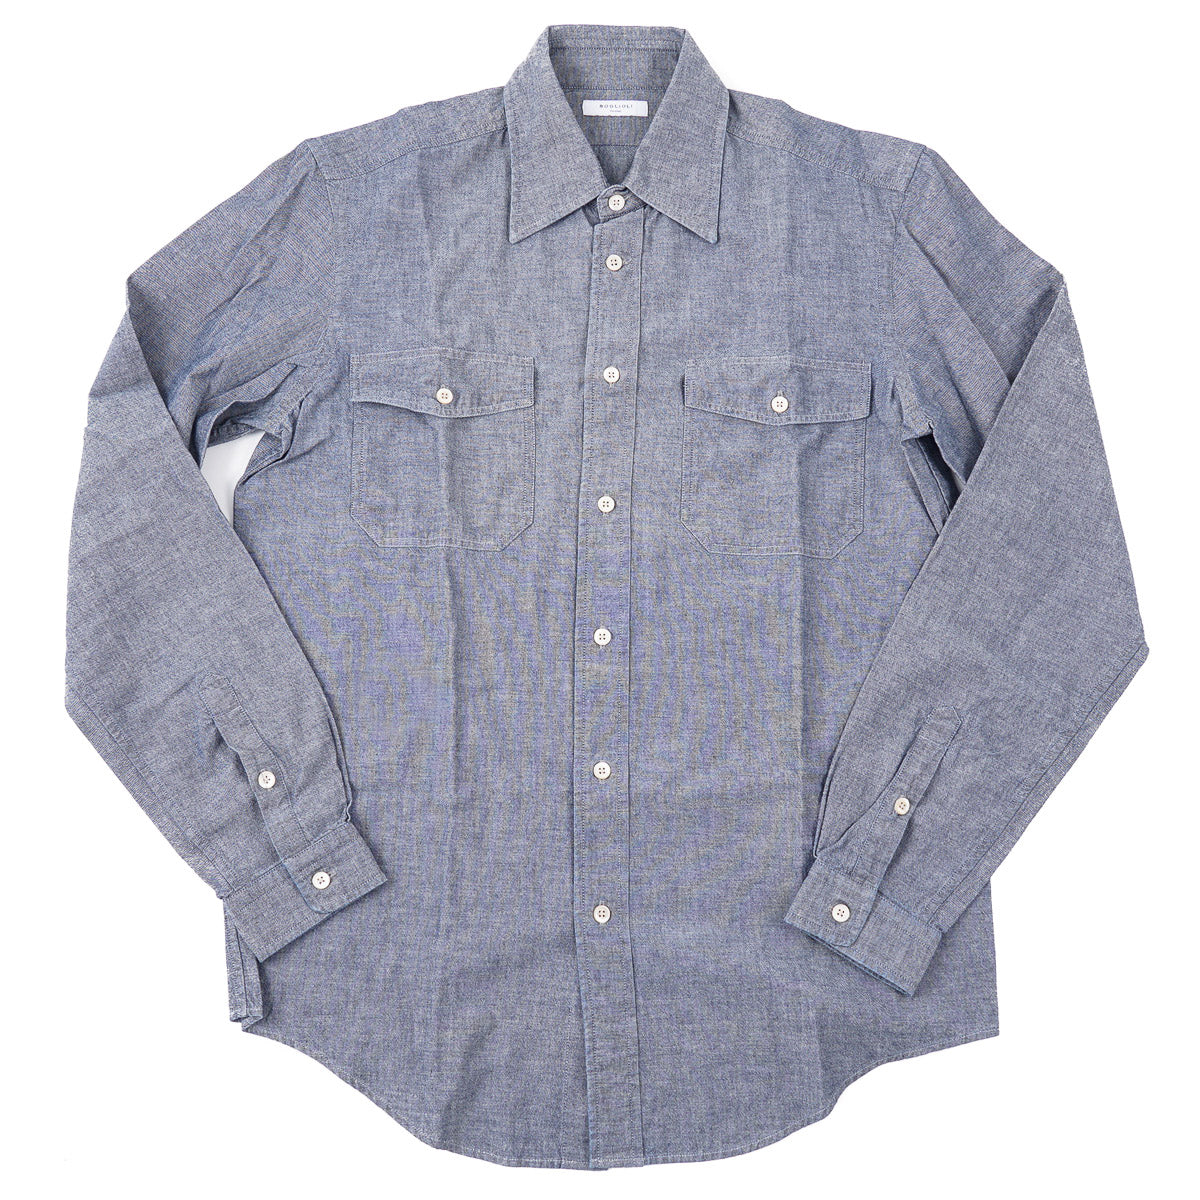 Boglioli Cotton Shirt in Blue Chambray - Top Shelf Apparel